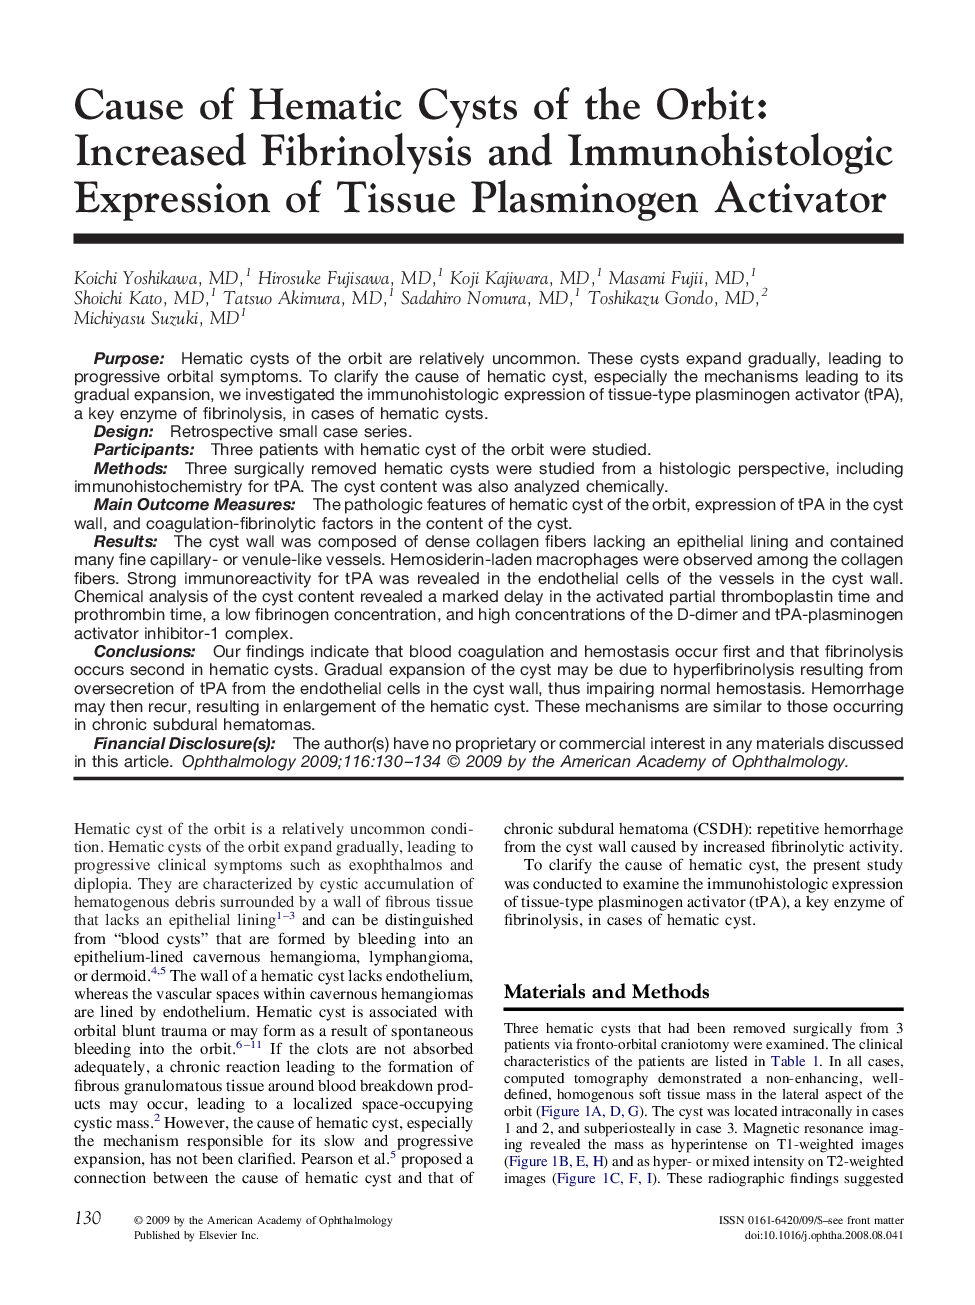 Cause of Hematic Cysts of the Orbit: Increased Fibrinolysis and Immunohistologic Expression of Tissue Plasminogen Activator